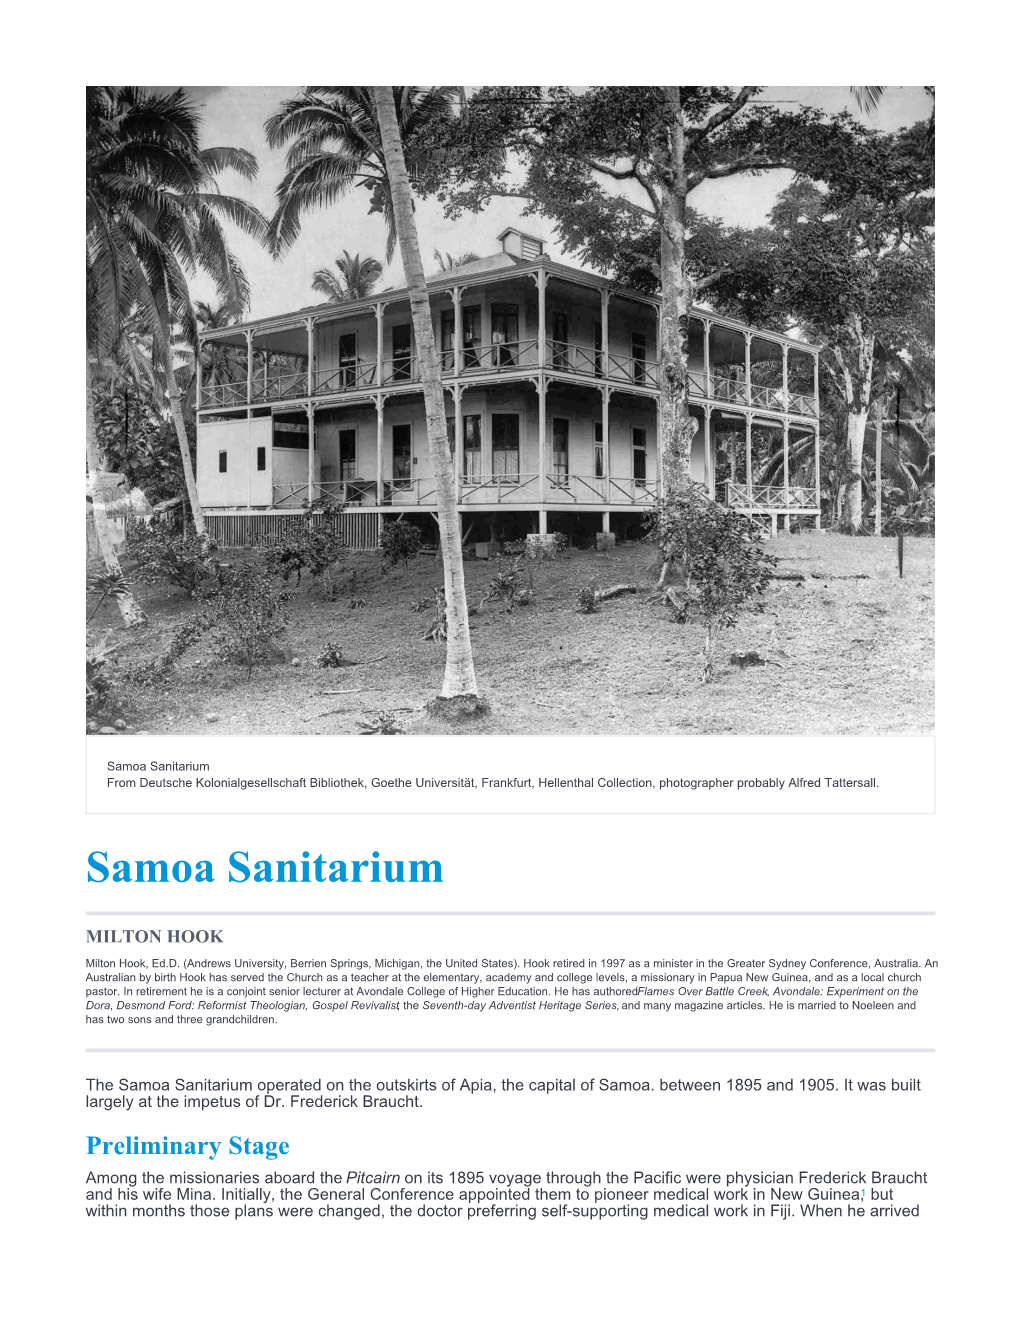 Samoa Sanitarium from Deutsche Kolonialgesellschaft Bibliothek, Goethe Universität, Frankfurt, Hellenthal Collection, Photographer Probably Alfred Tattersall